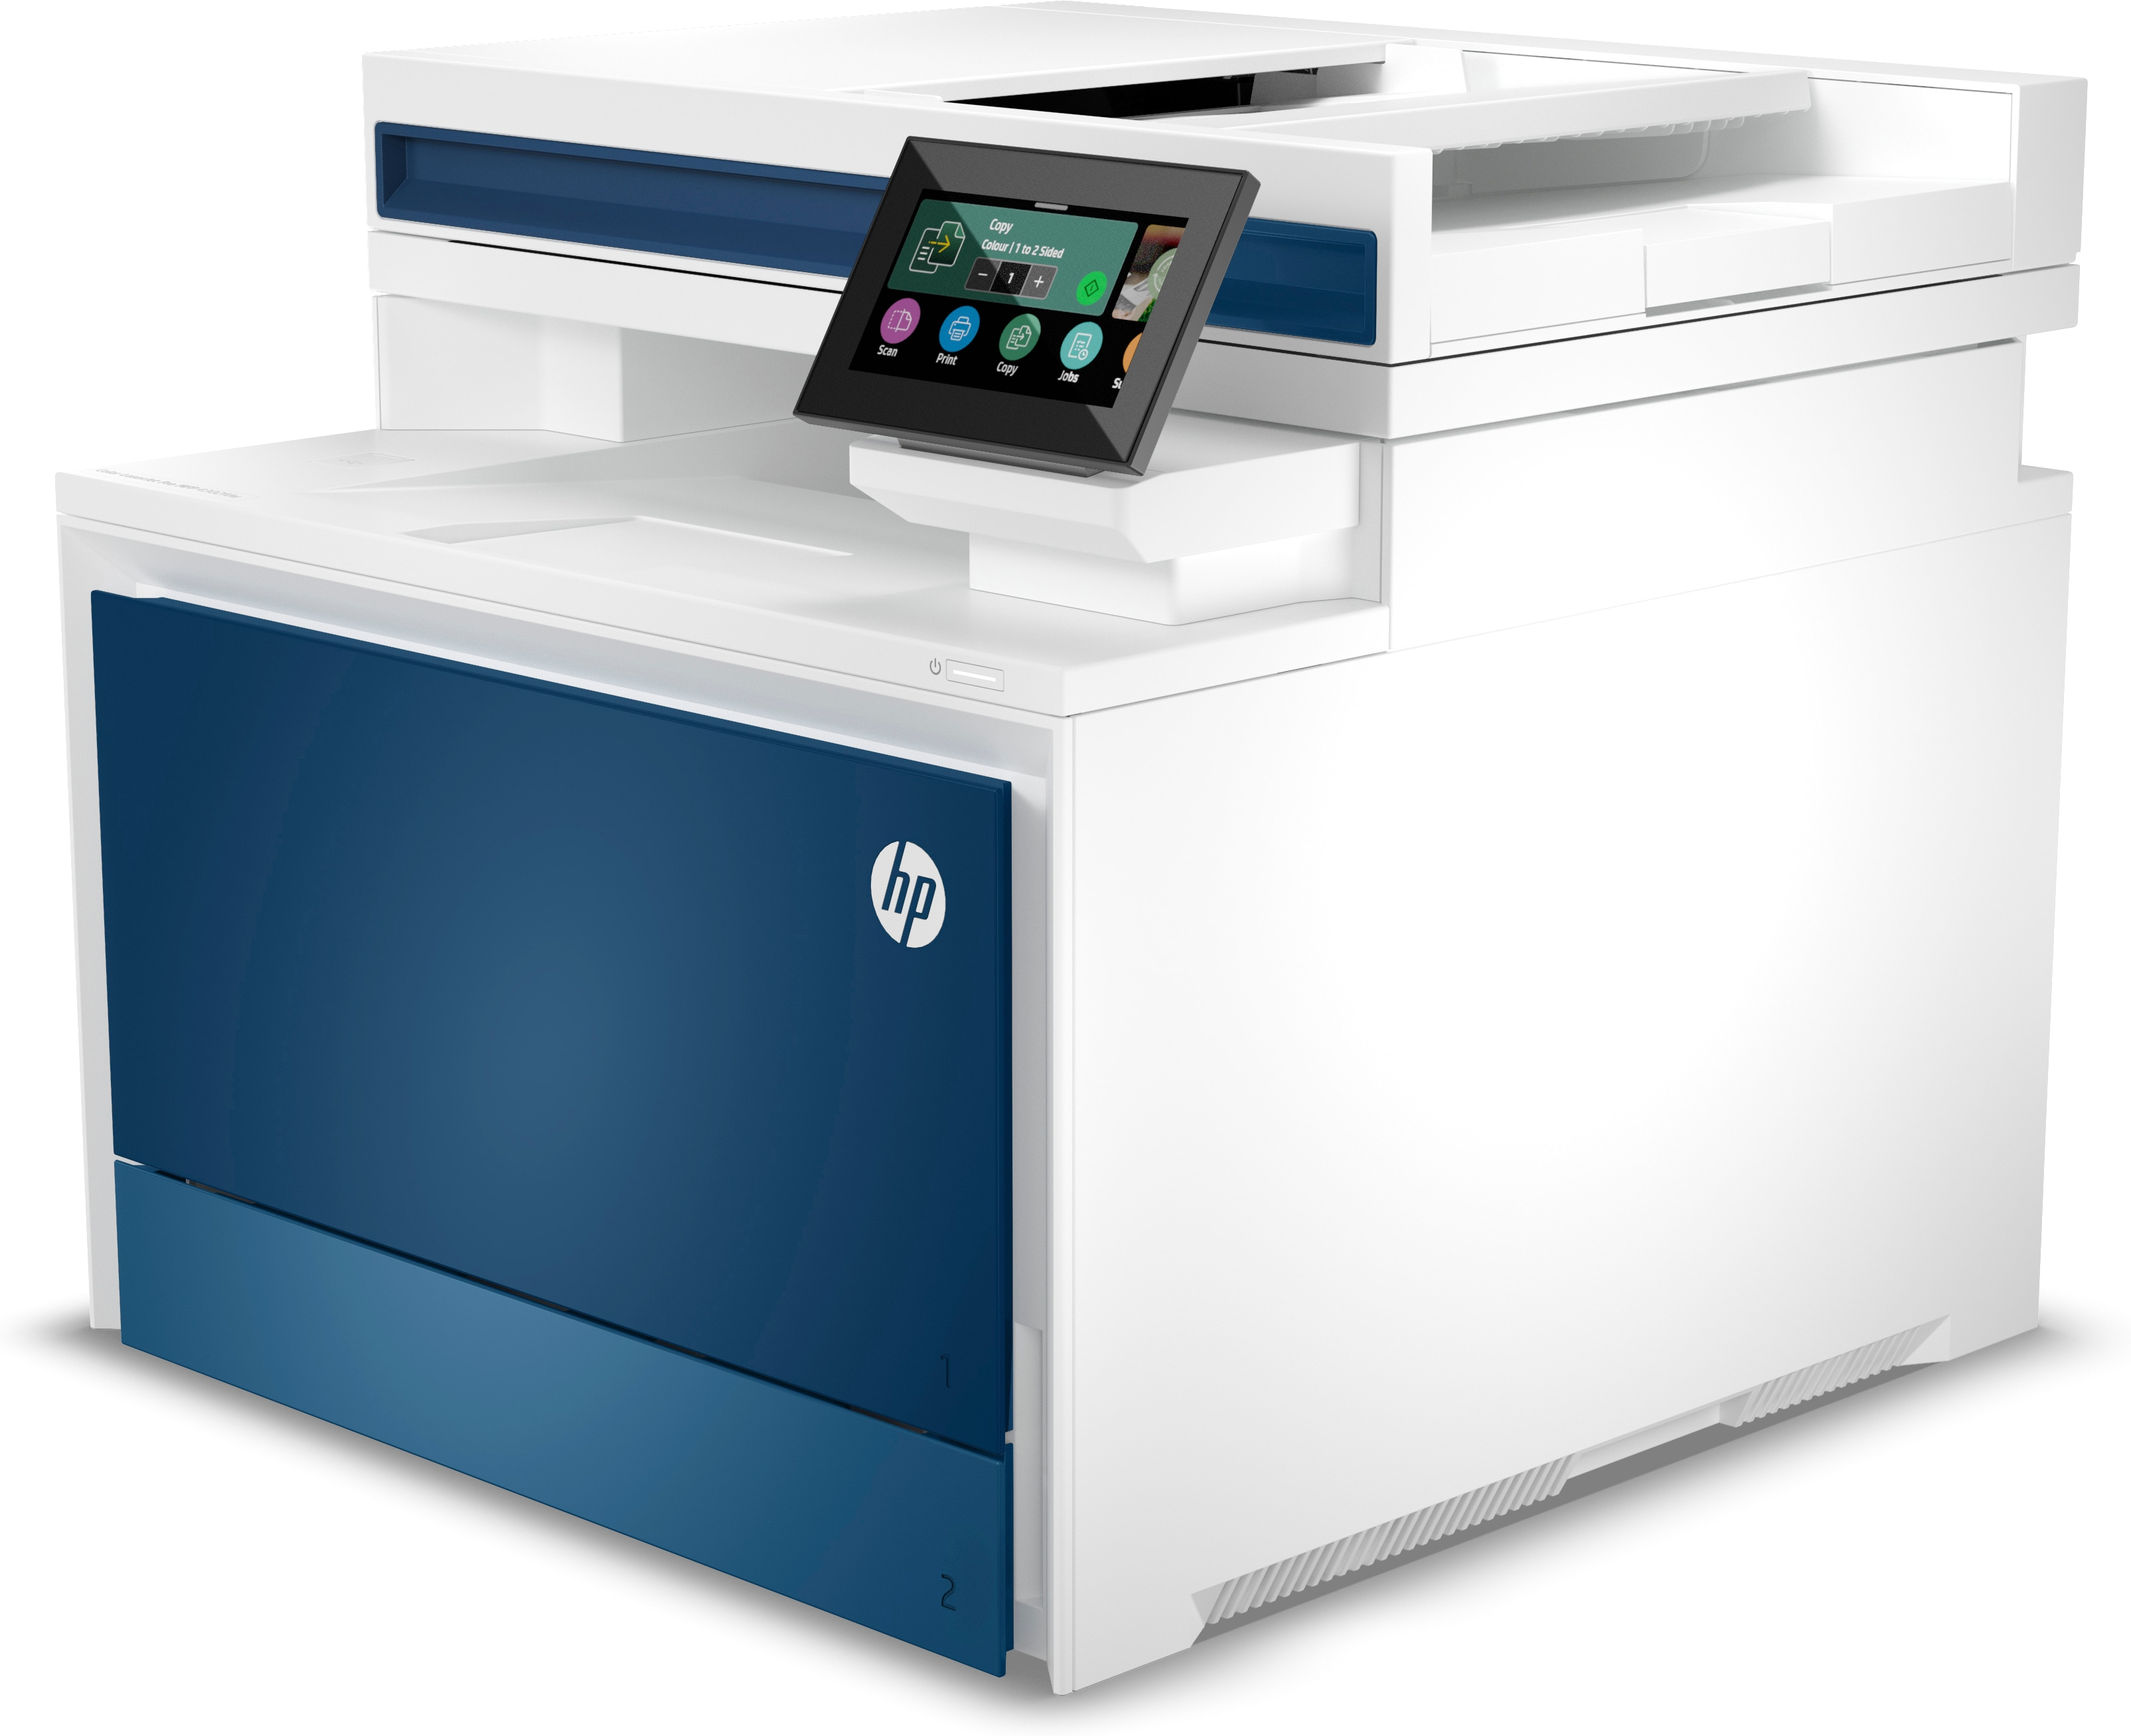 HP 5HH64F#B19  HP Color LaserJet Pro Stampante multifunzione 4302fdw,  Colore, Stampante per Piccole e medie imprese, Stampa, copia, scansione,  fax, wireless; idonea a Instant Ink; stampa da smartphone o tablet;  Alimentatore